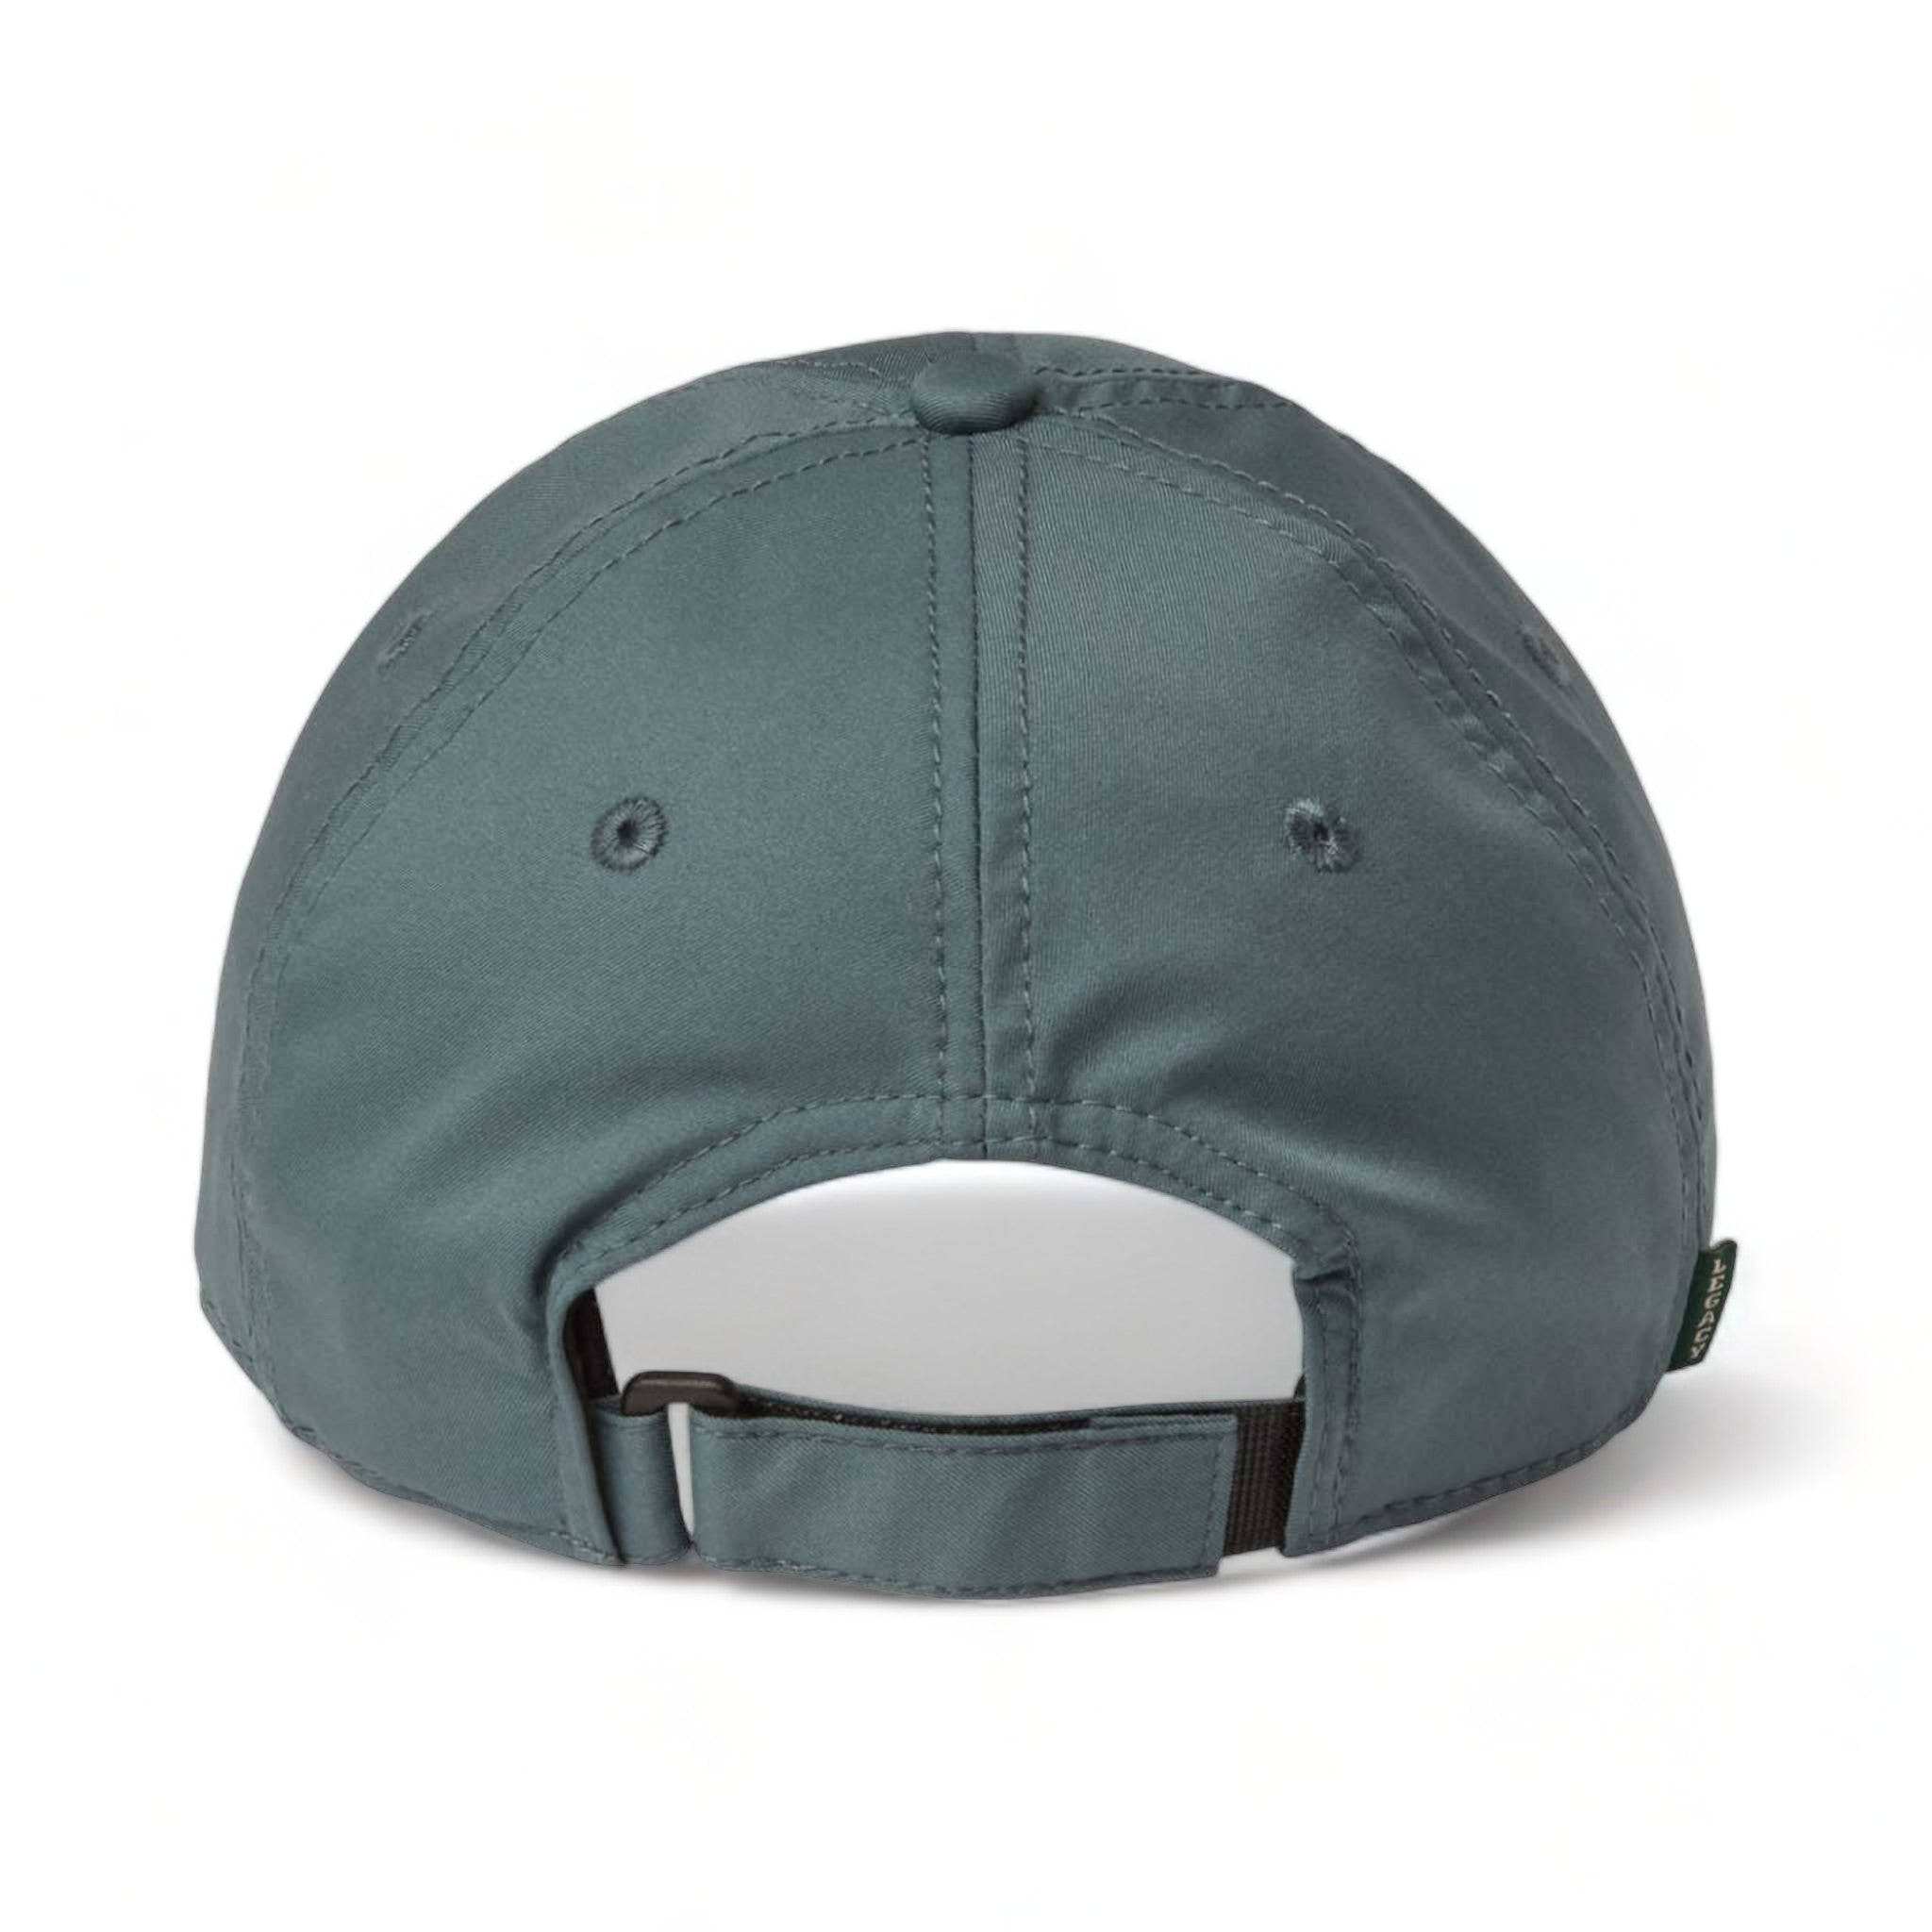 Back view of LEGACY CFA custom hat in blue steel